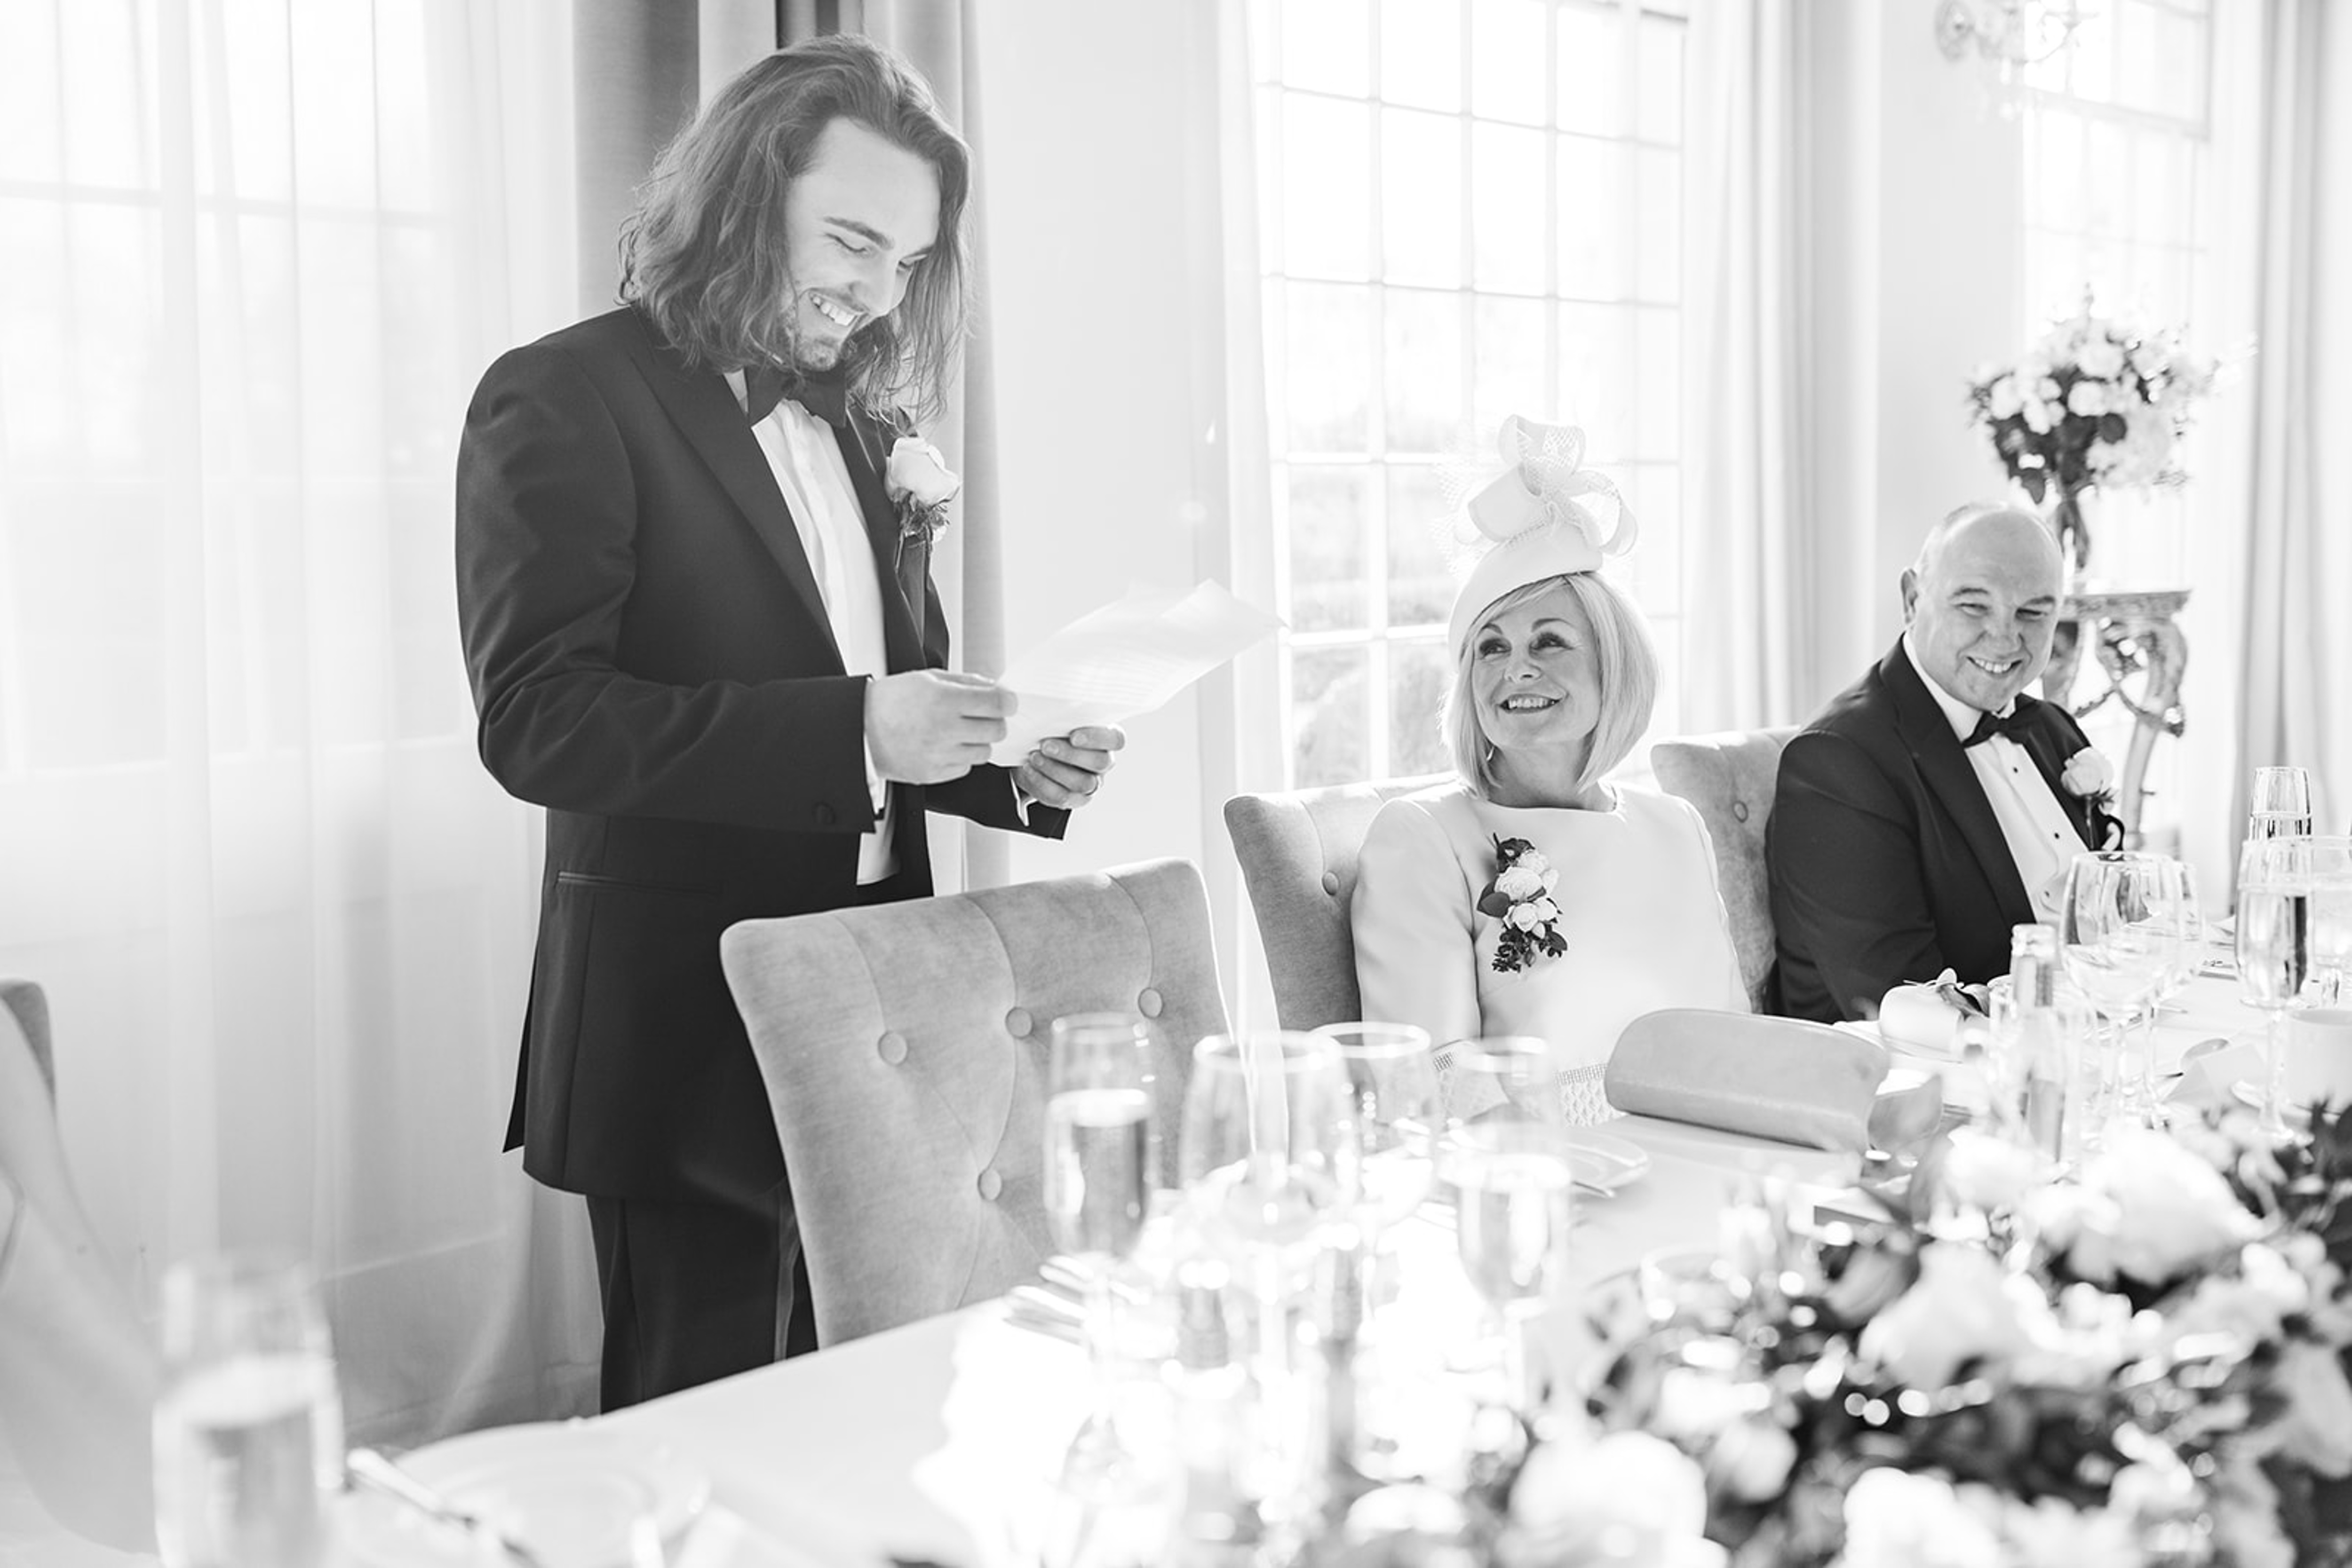 Wedding Breakfast at Rushton Hall. UK Wedding Photographer - Aimee Joy Photography